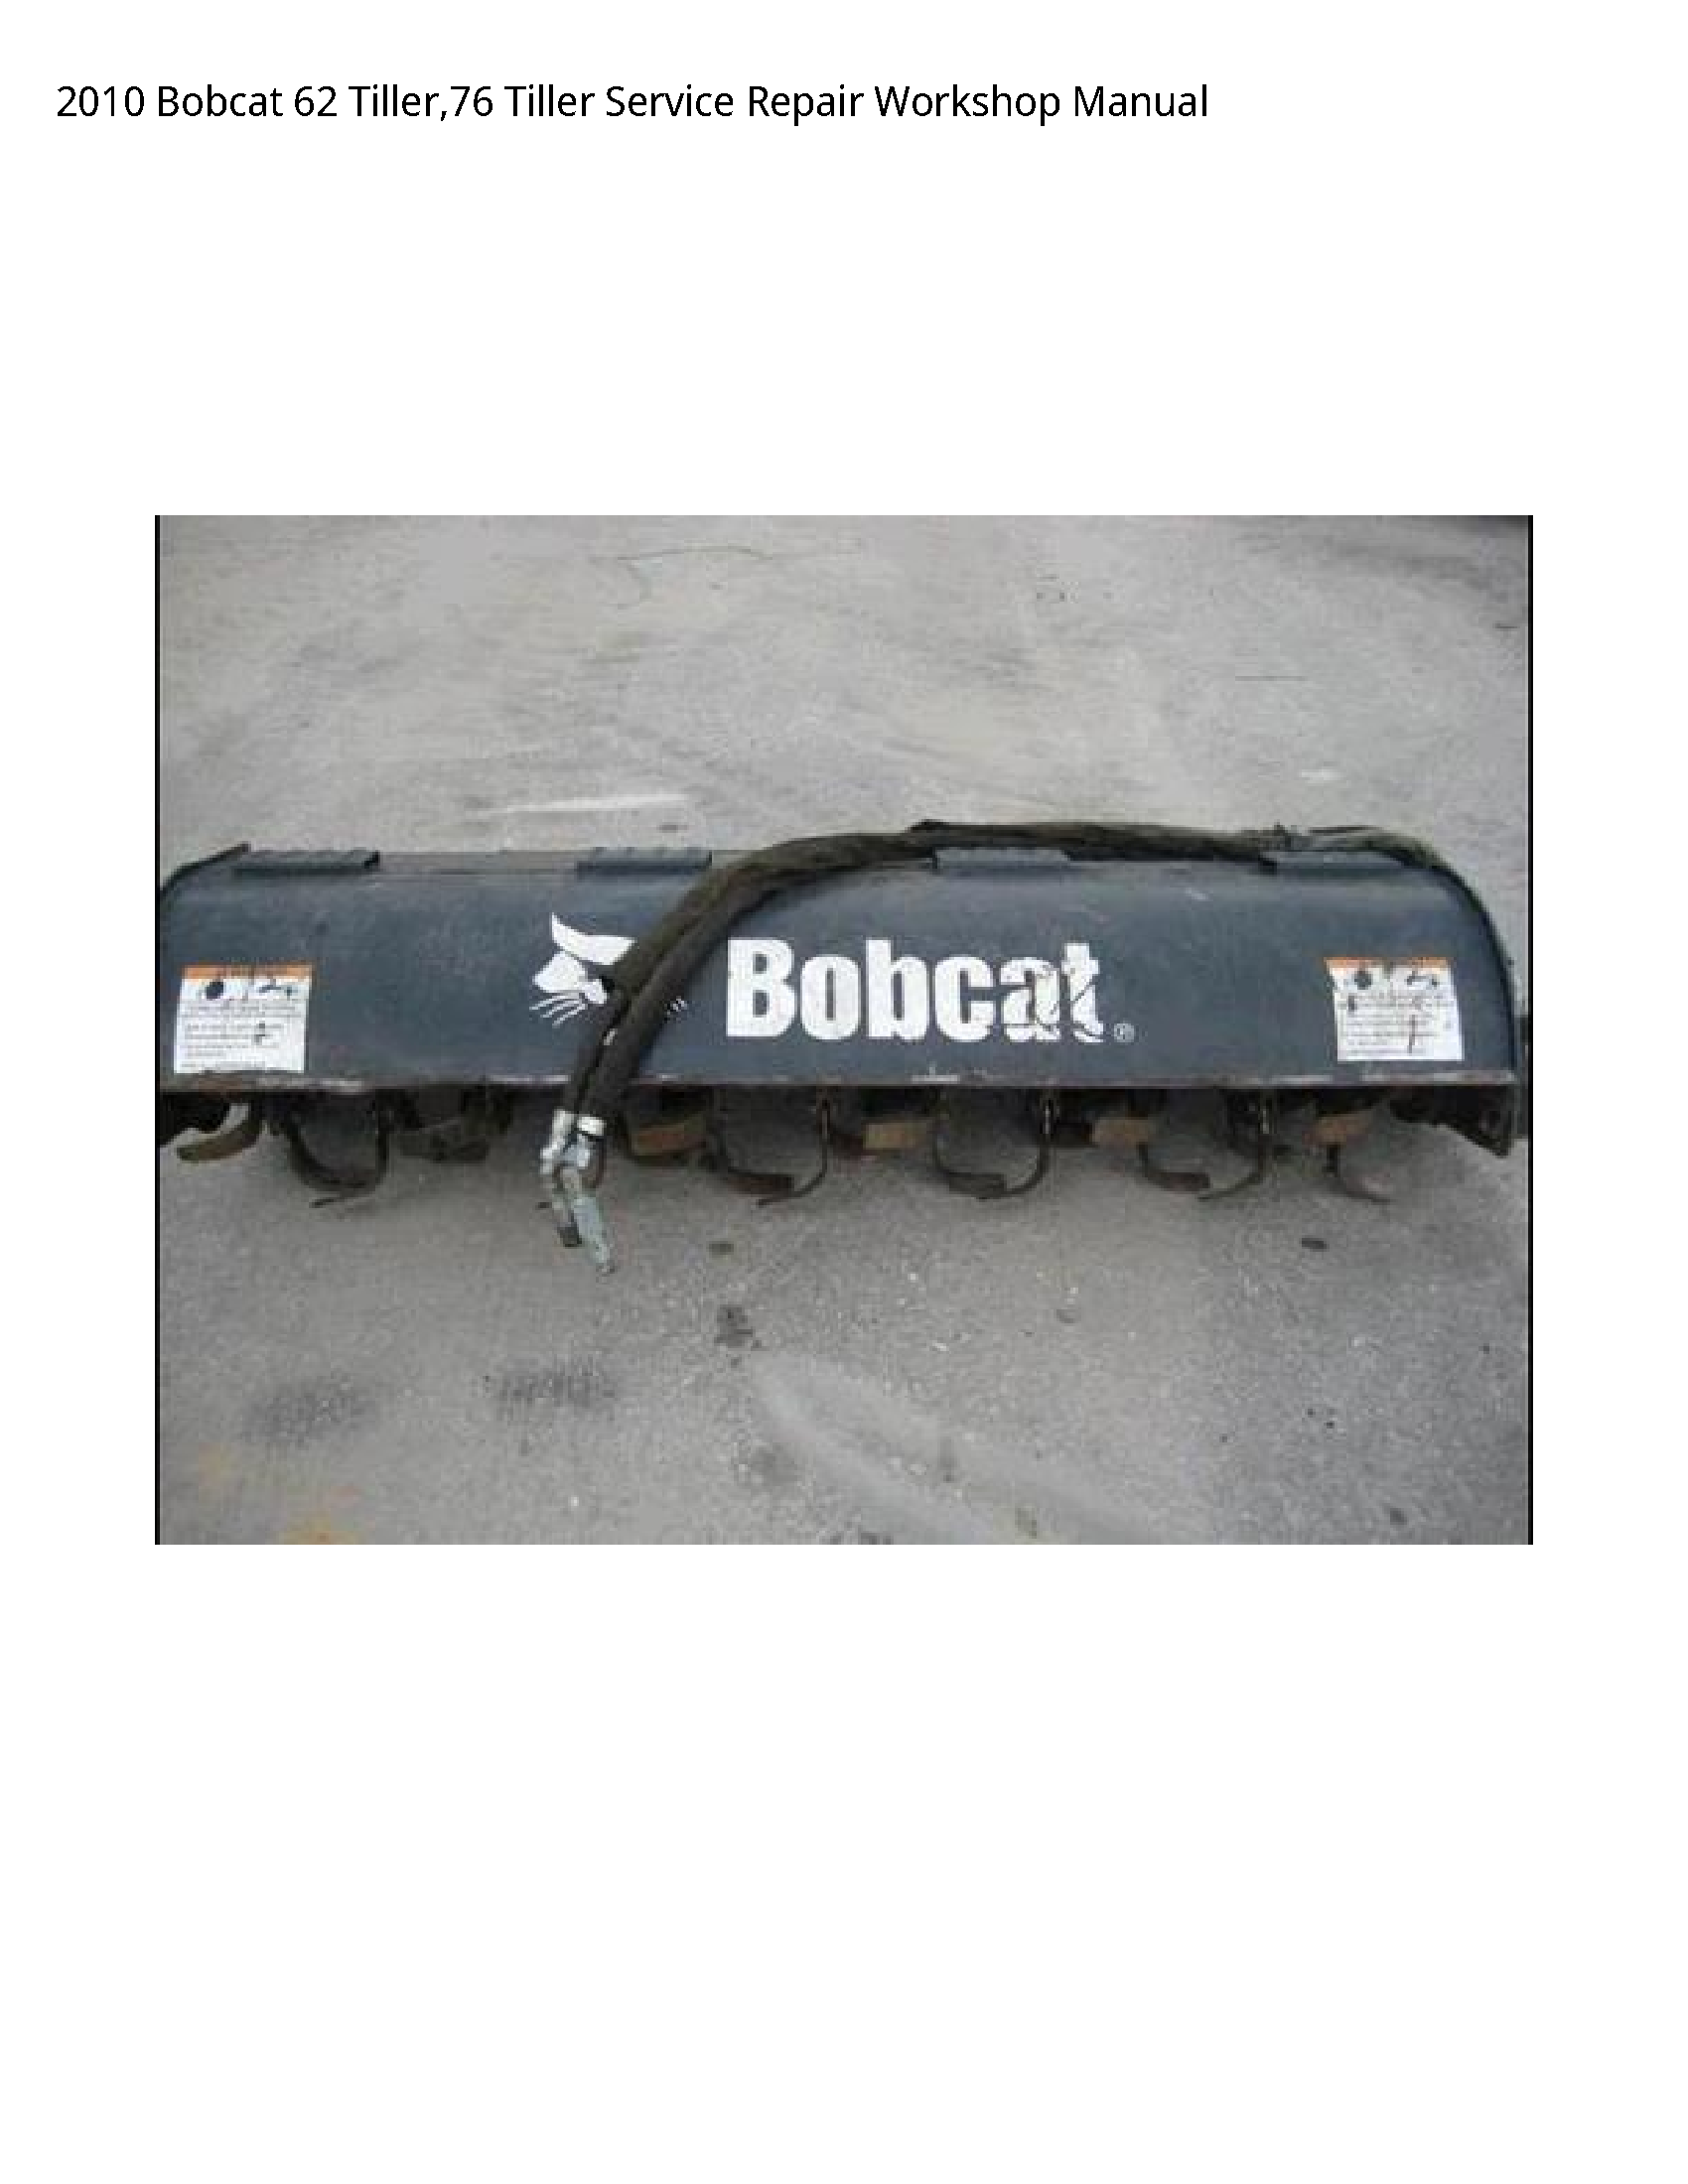 Bobcat 62 Tiller manual